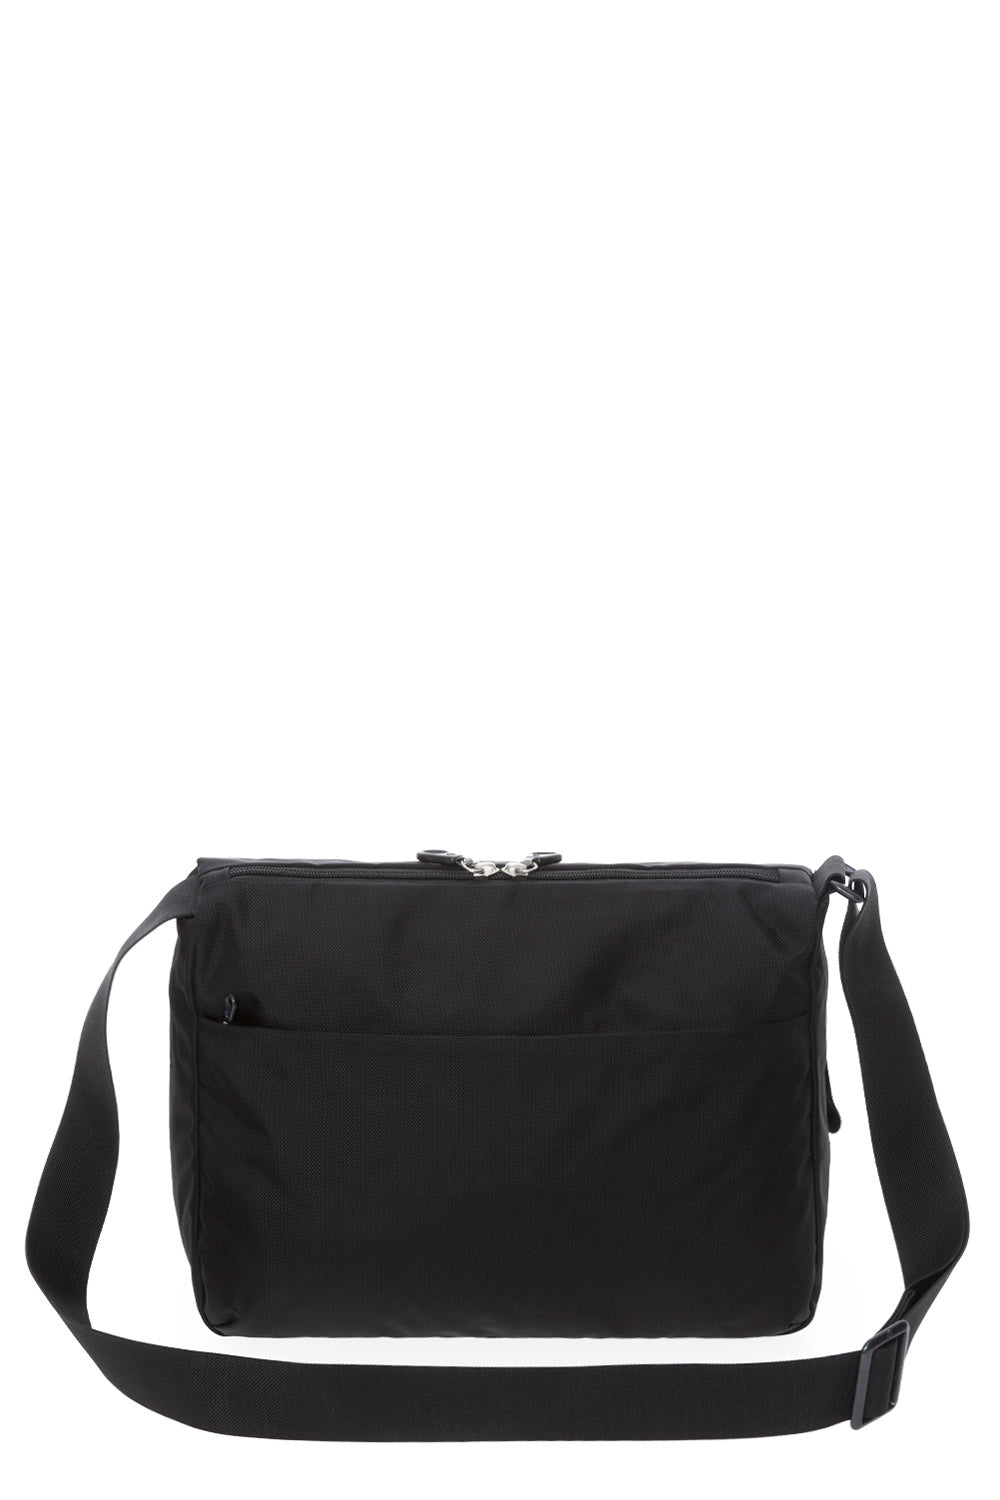 MANDARINA DUCK MD20 CROSSBODY BAG BLACK – Sydney Luggage